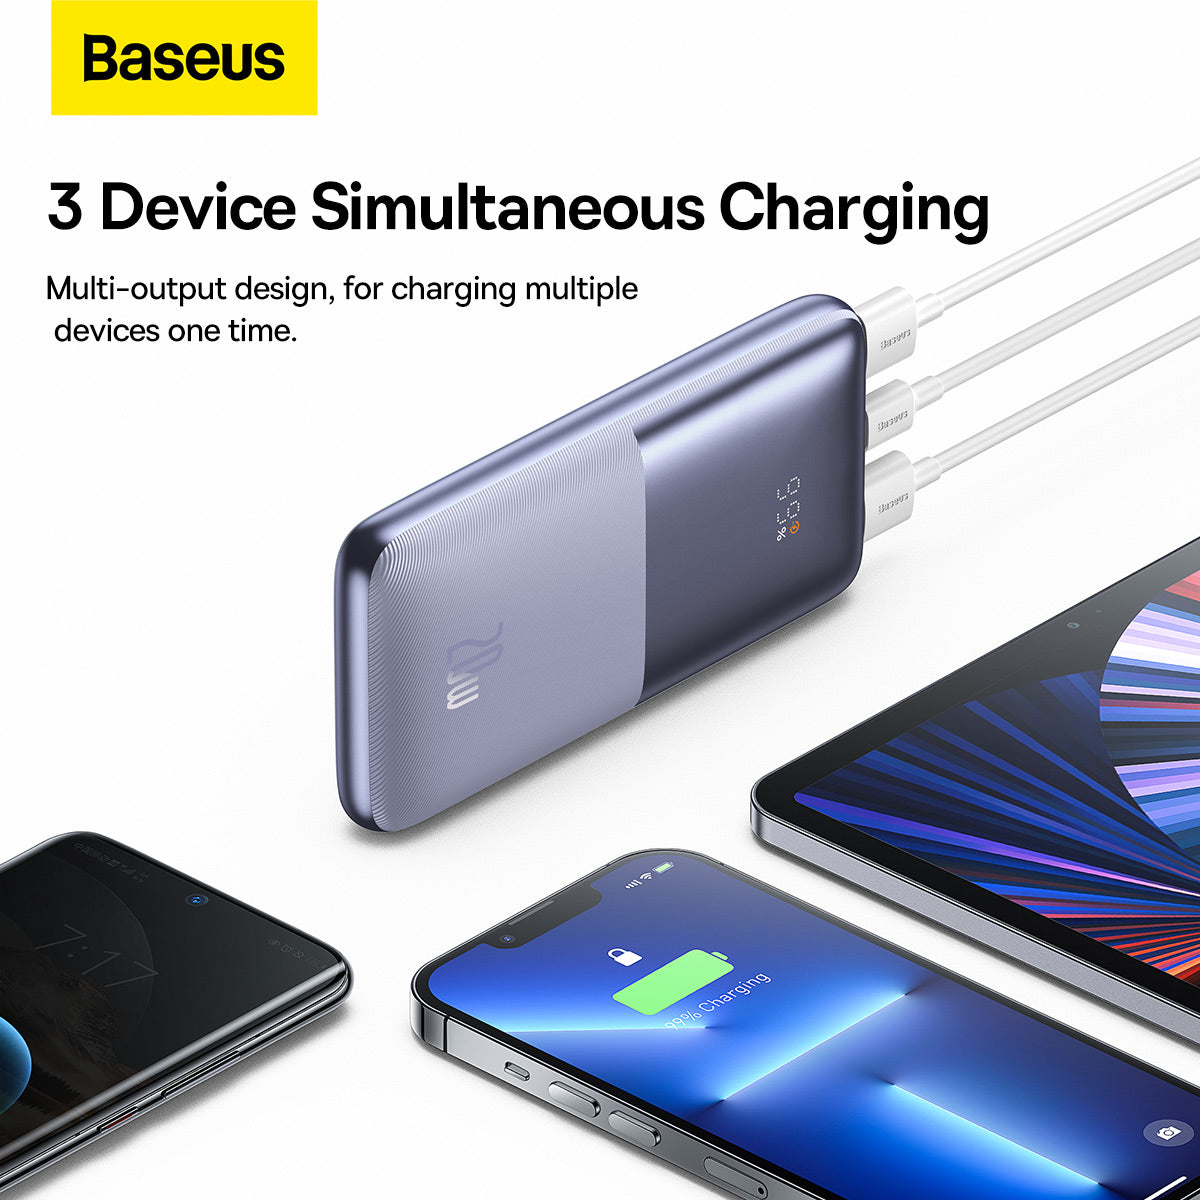 Baseus Bipow Pro Digital Display Fast Charge Power Bank 10000mAh 20W